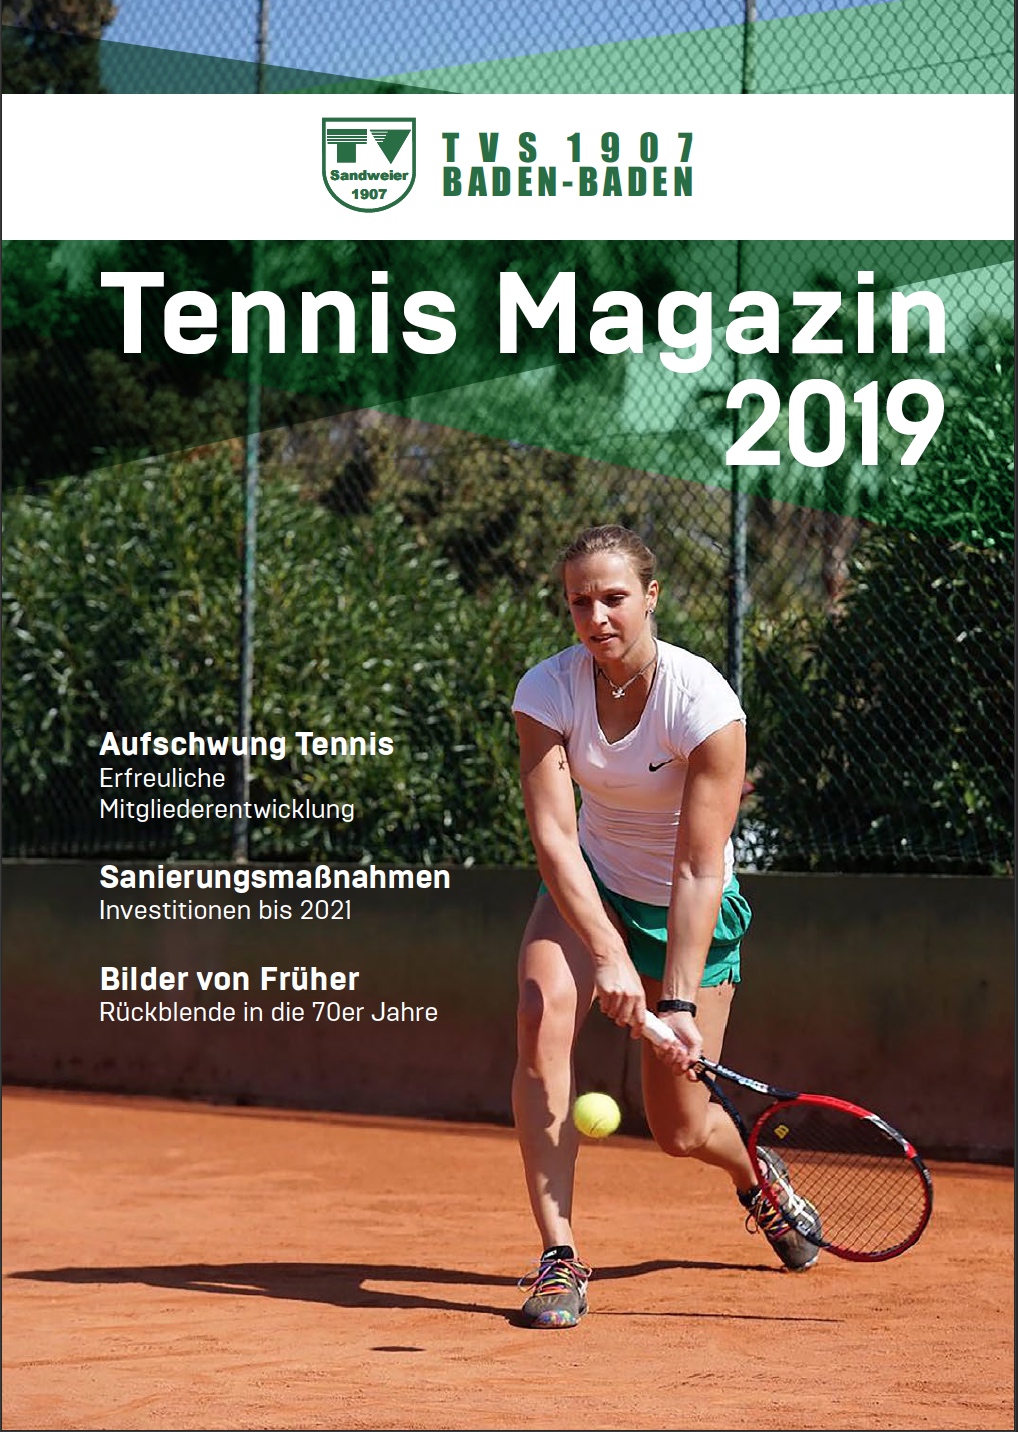 TVS Tennis Magazin 2019 Cover